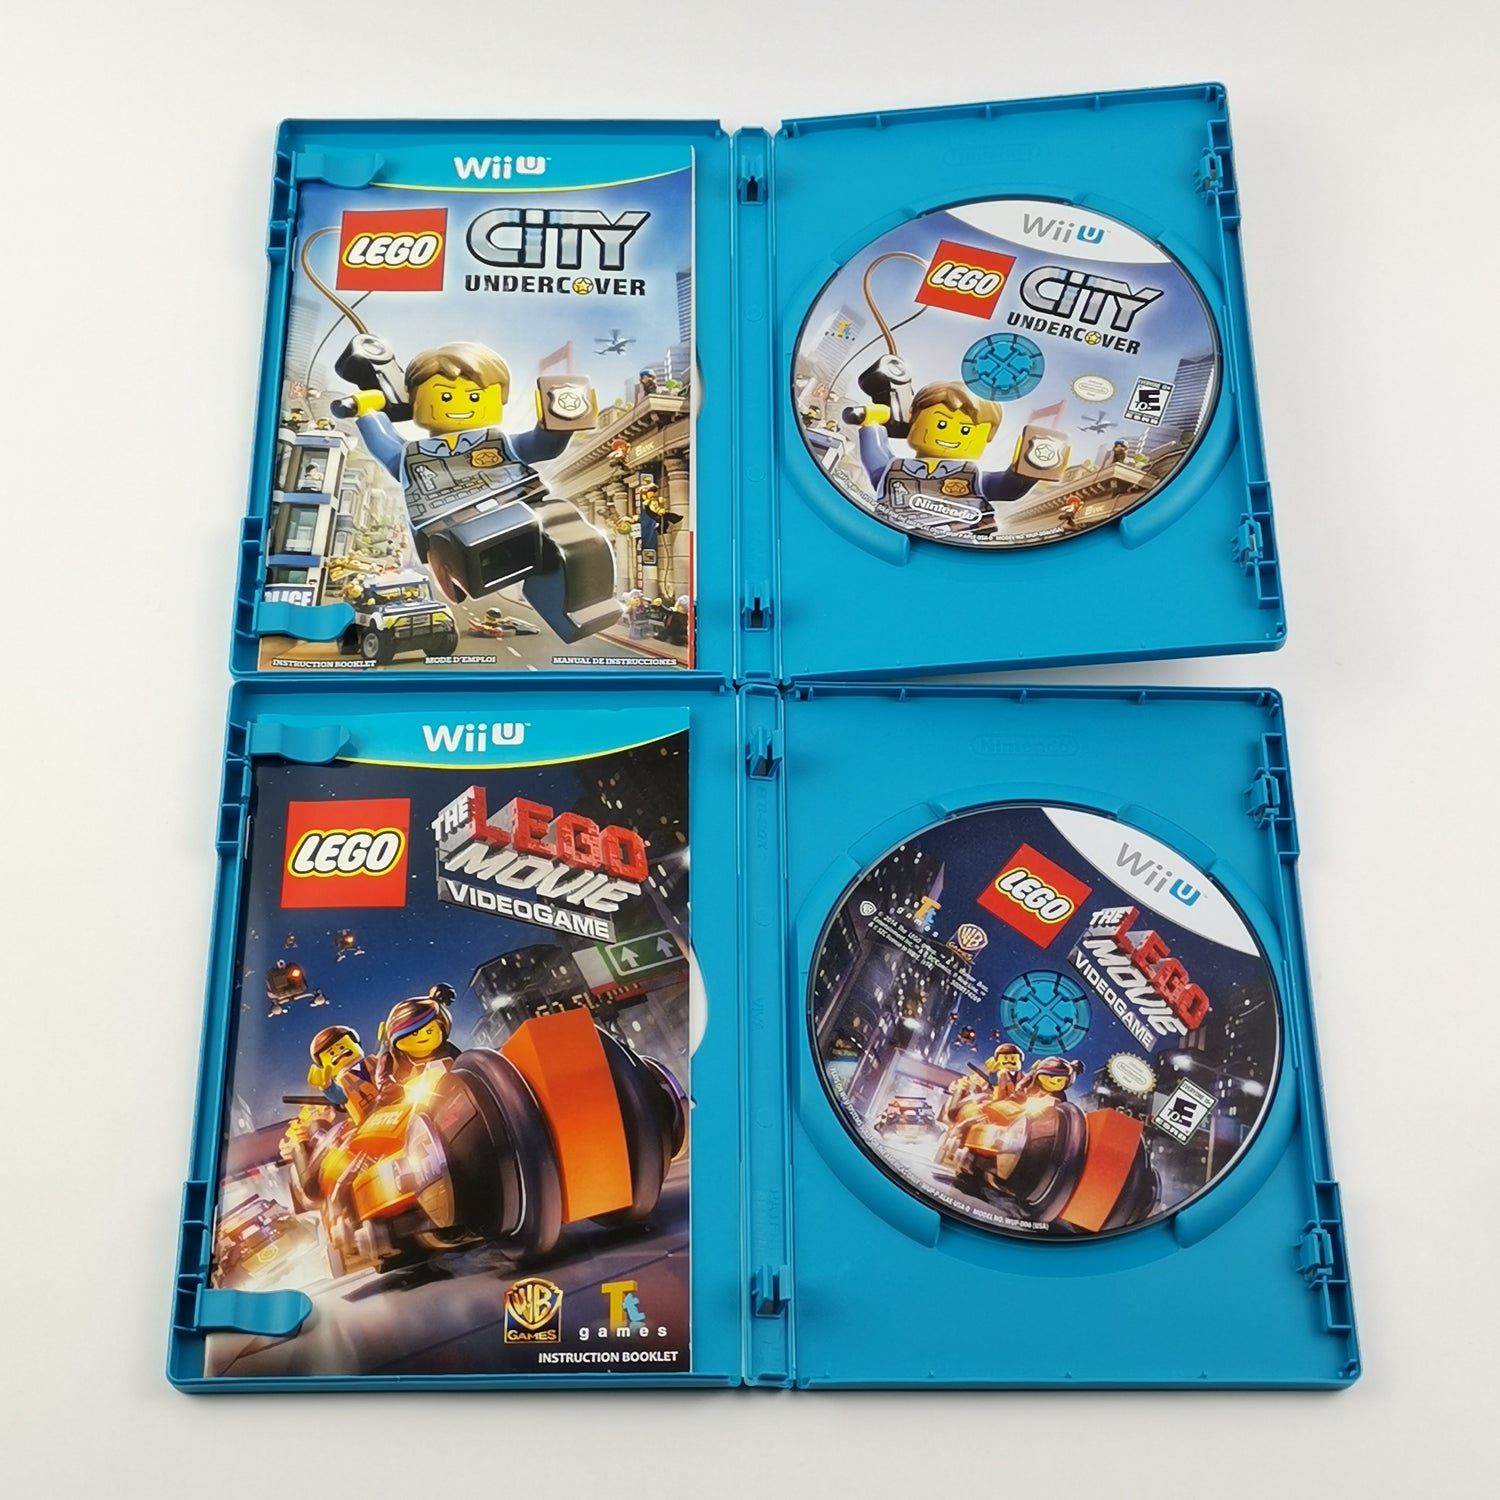 Nintendo Wii U games: Lego The Movie & Lego City Undercover - original packaging instructions